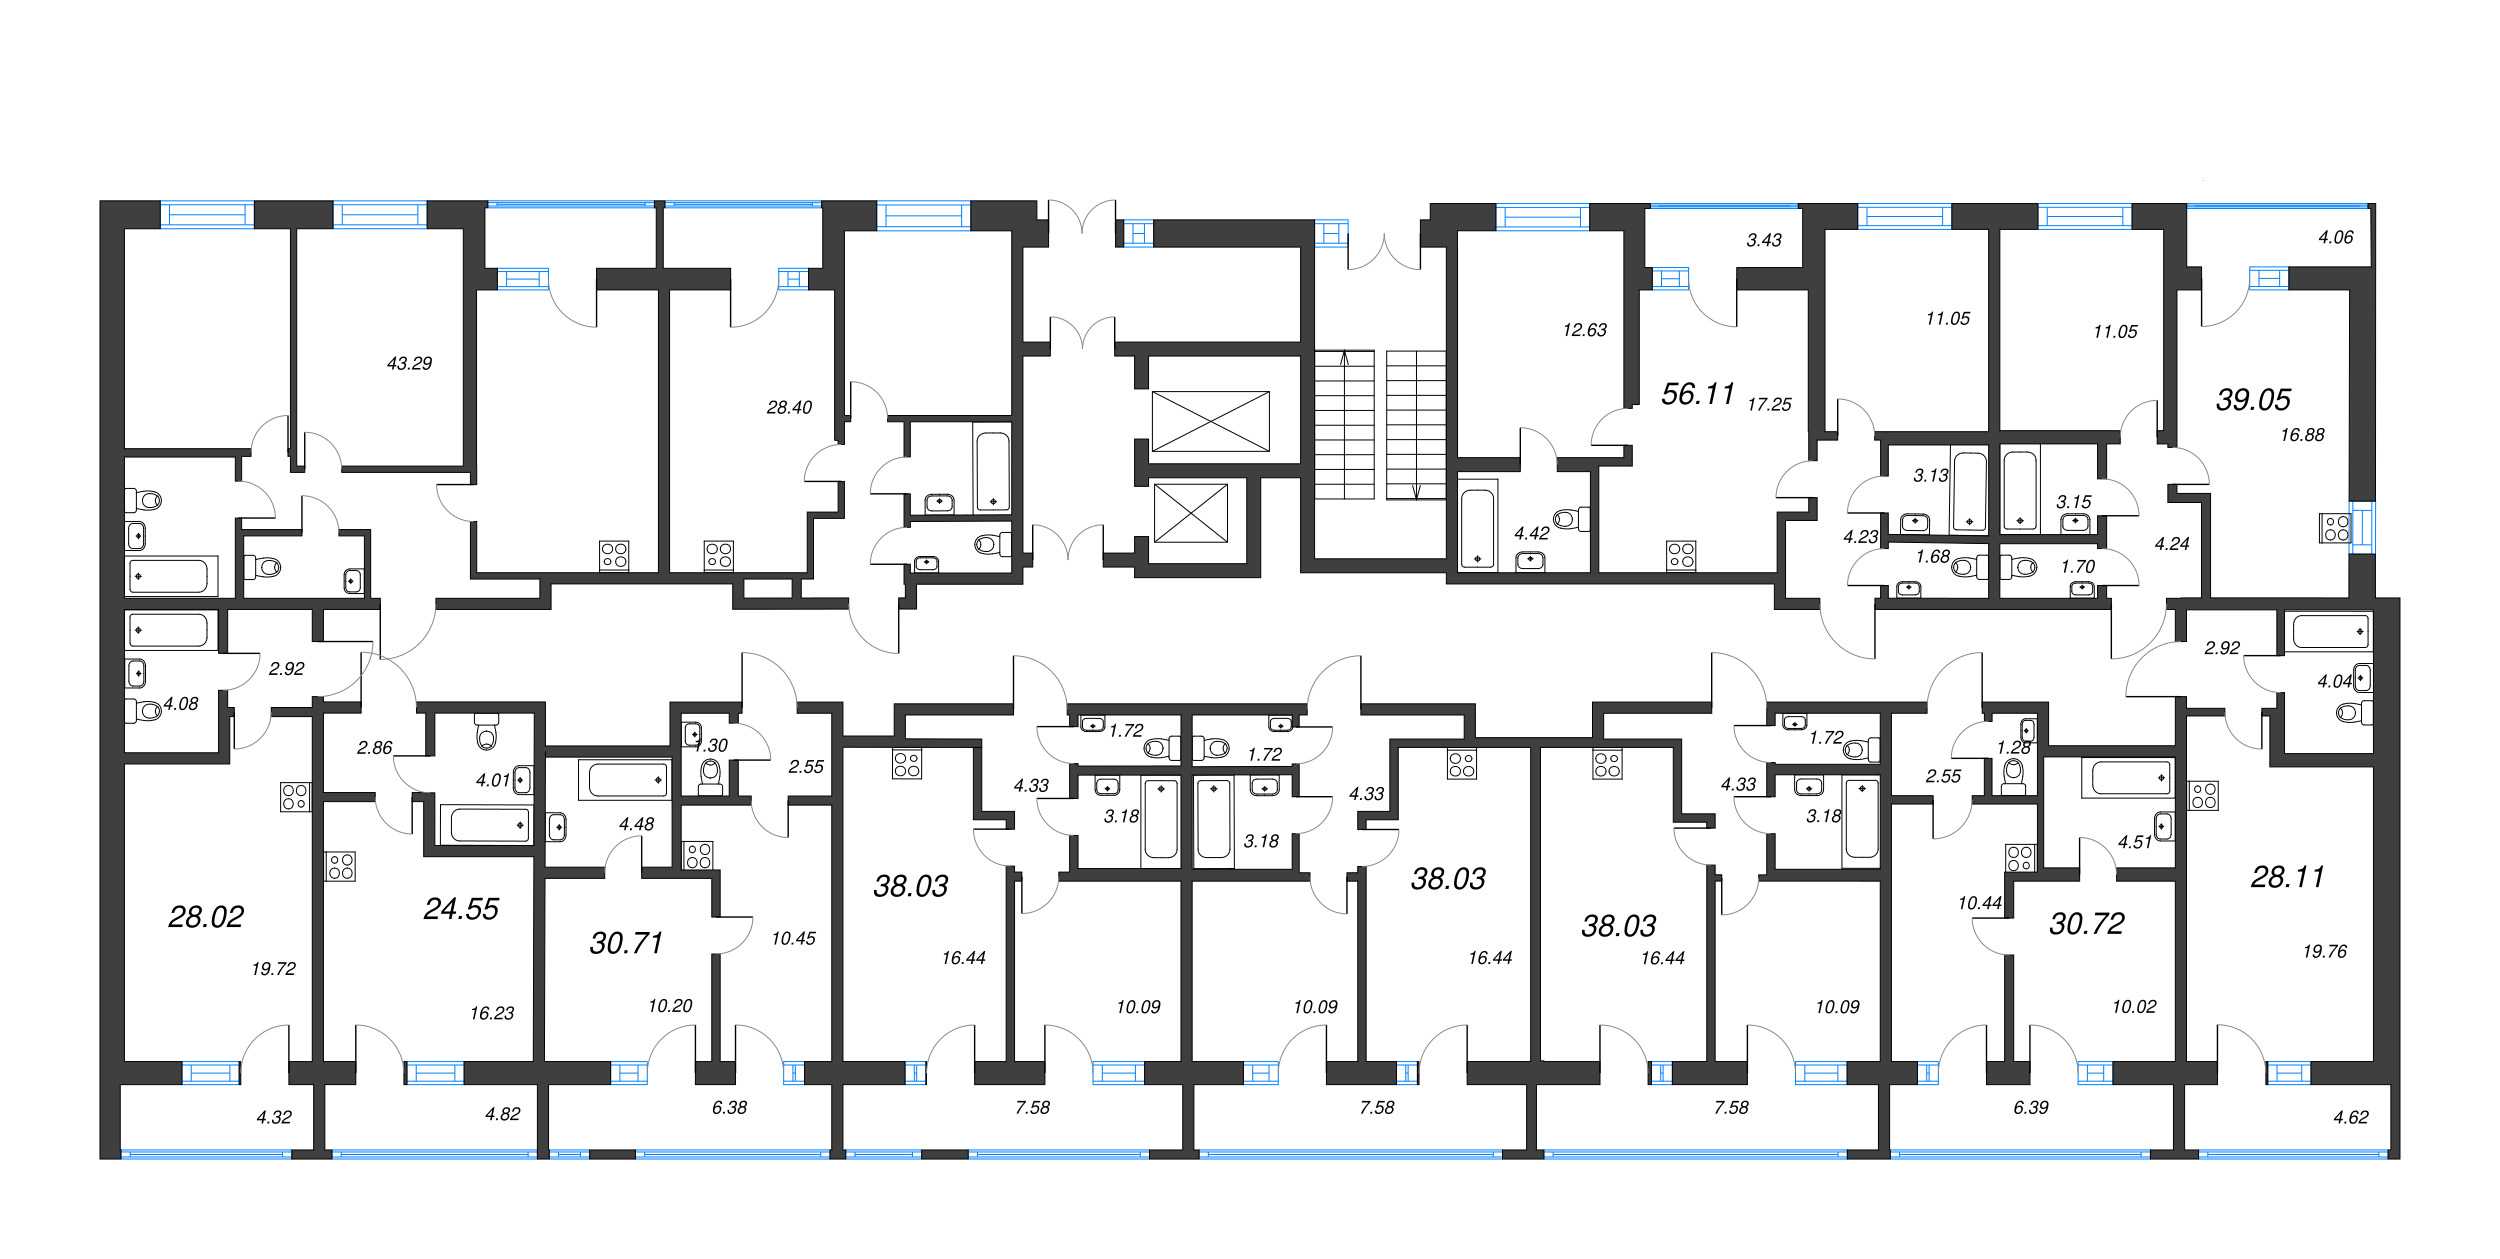 2-комнатная (Евро) квартира, 38.03 м² - планировка этажа